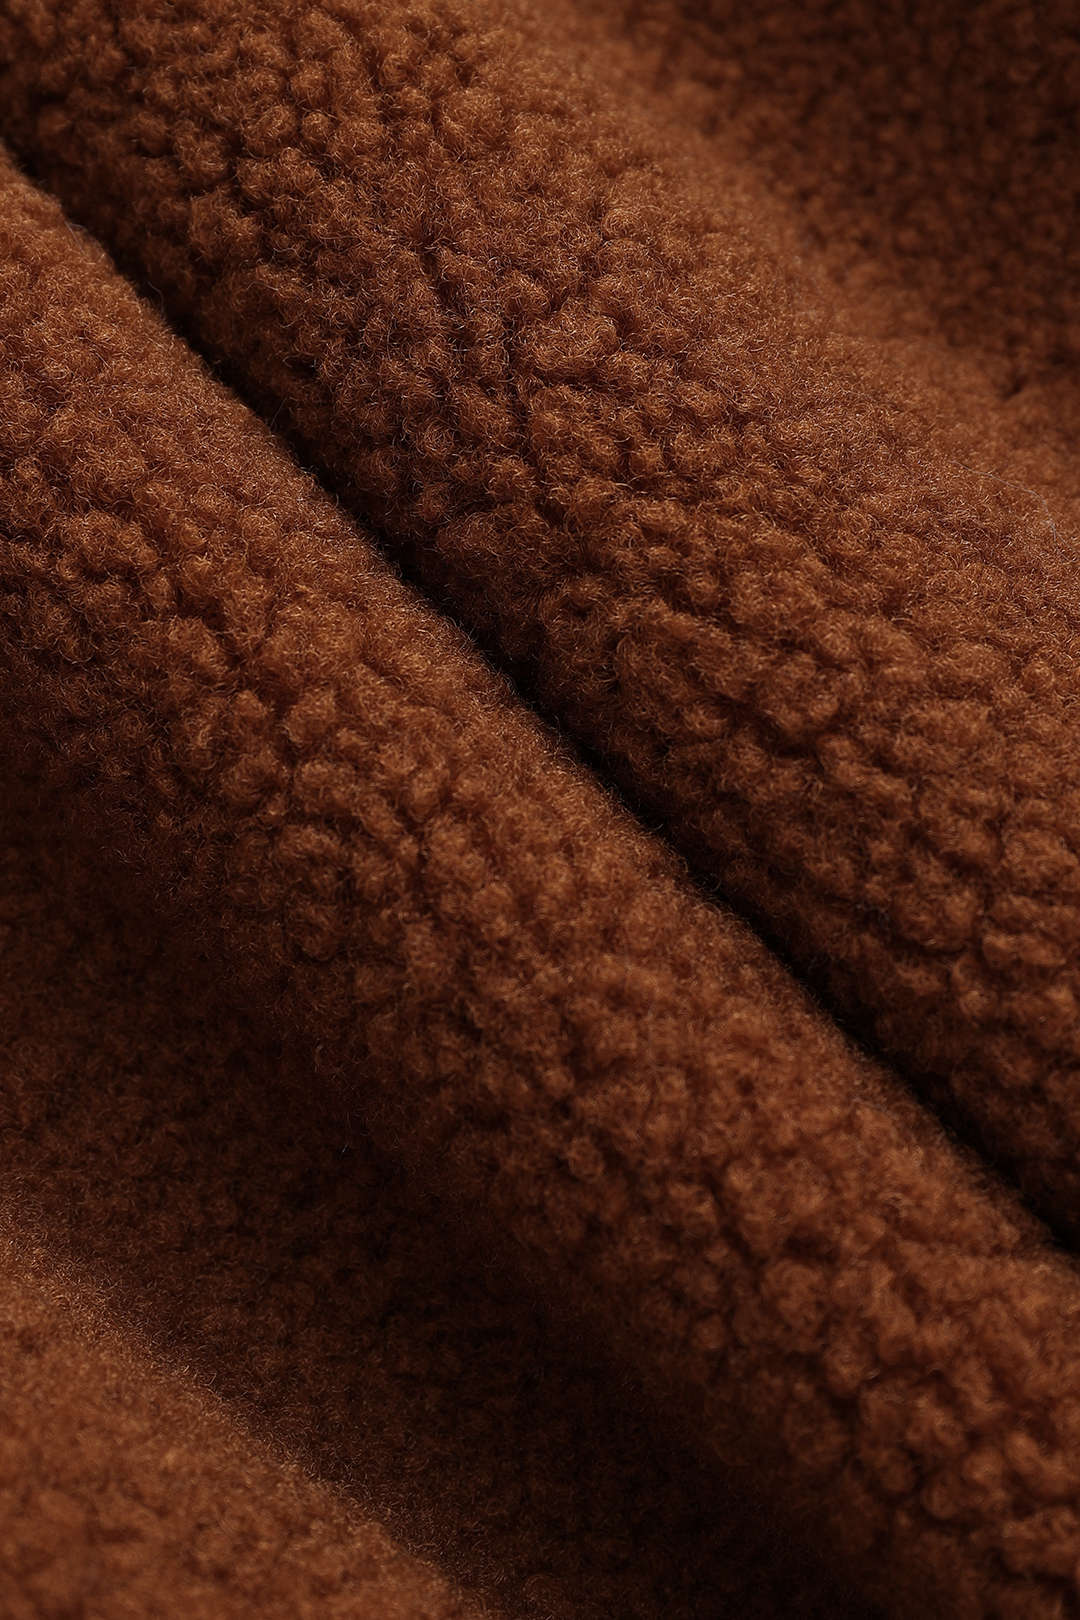 Textured Hooded Coat